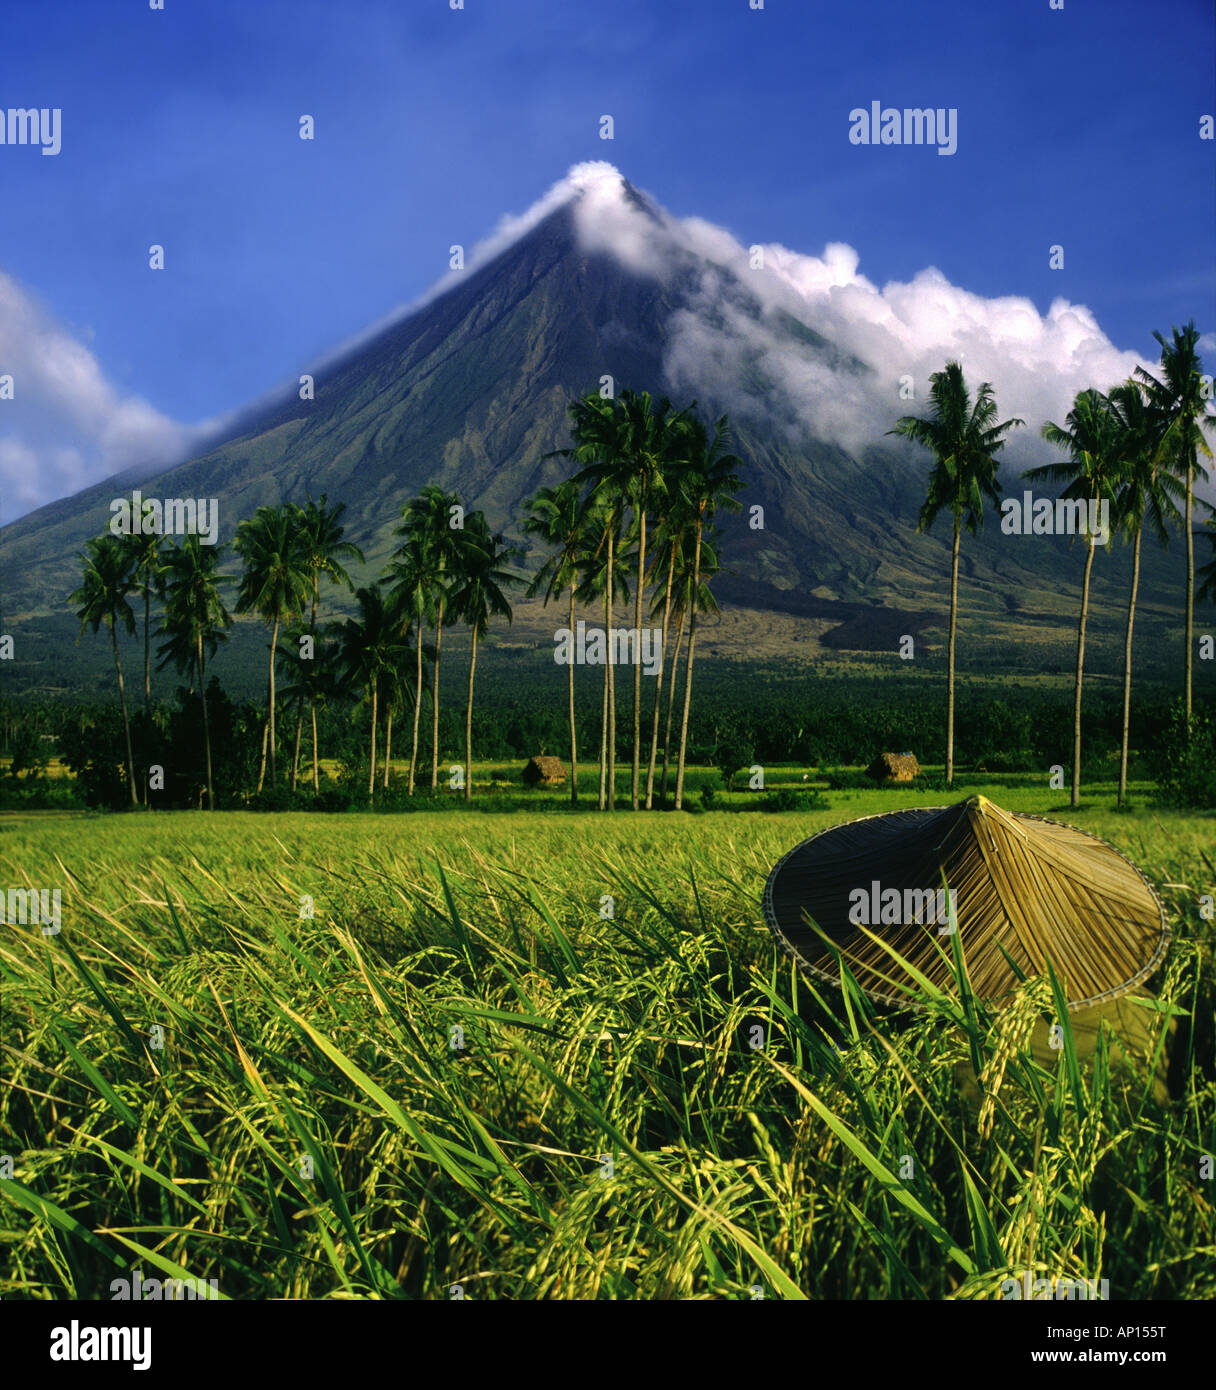 Ricefarmer and Mayon Volcano near Legazpi City, Legazpi, Luzon Island, Philippines Stock Photo